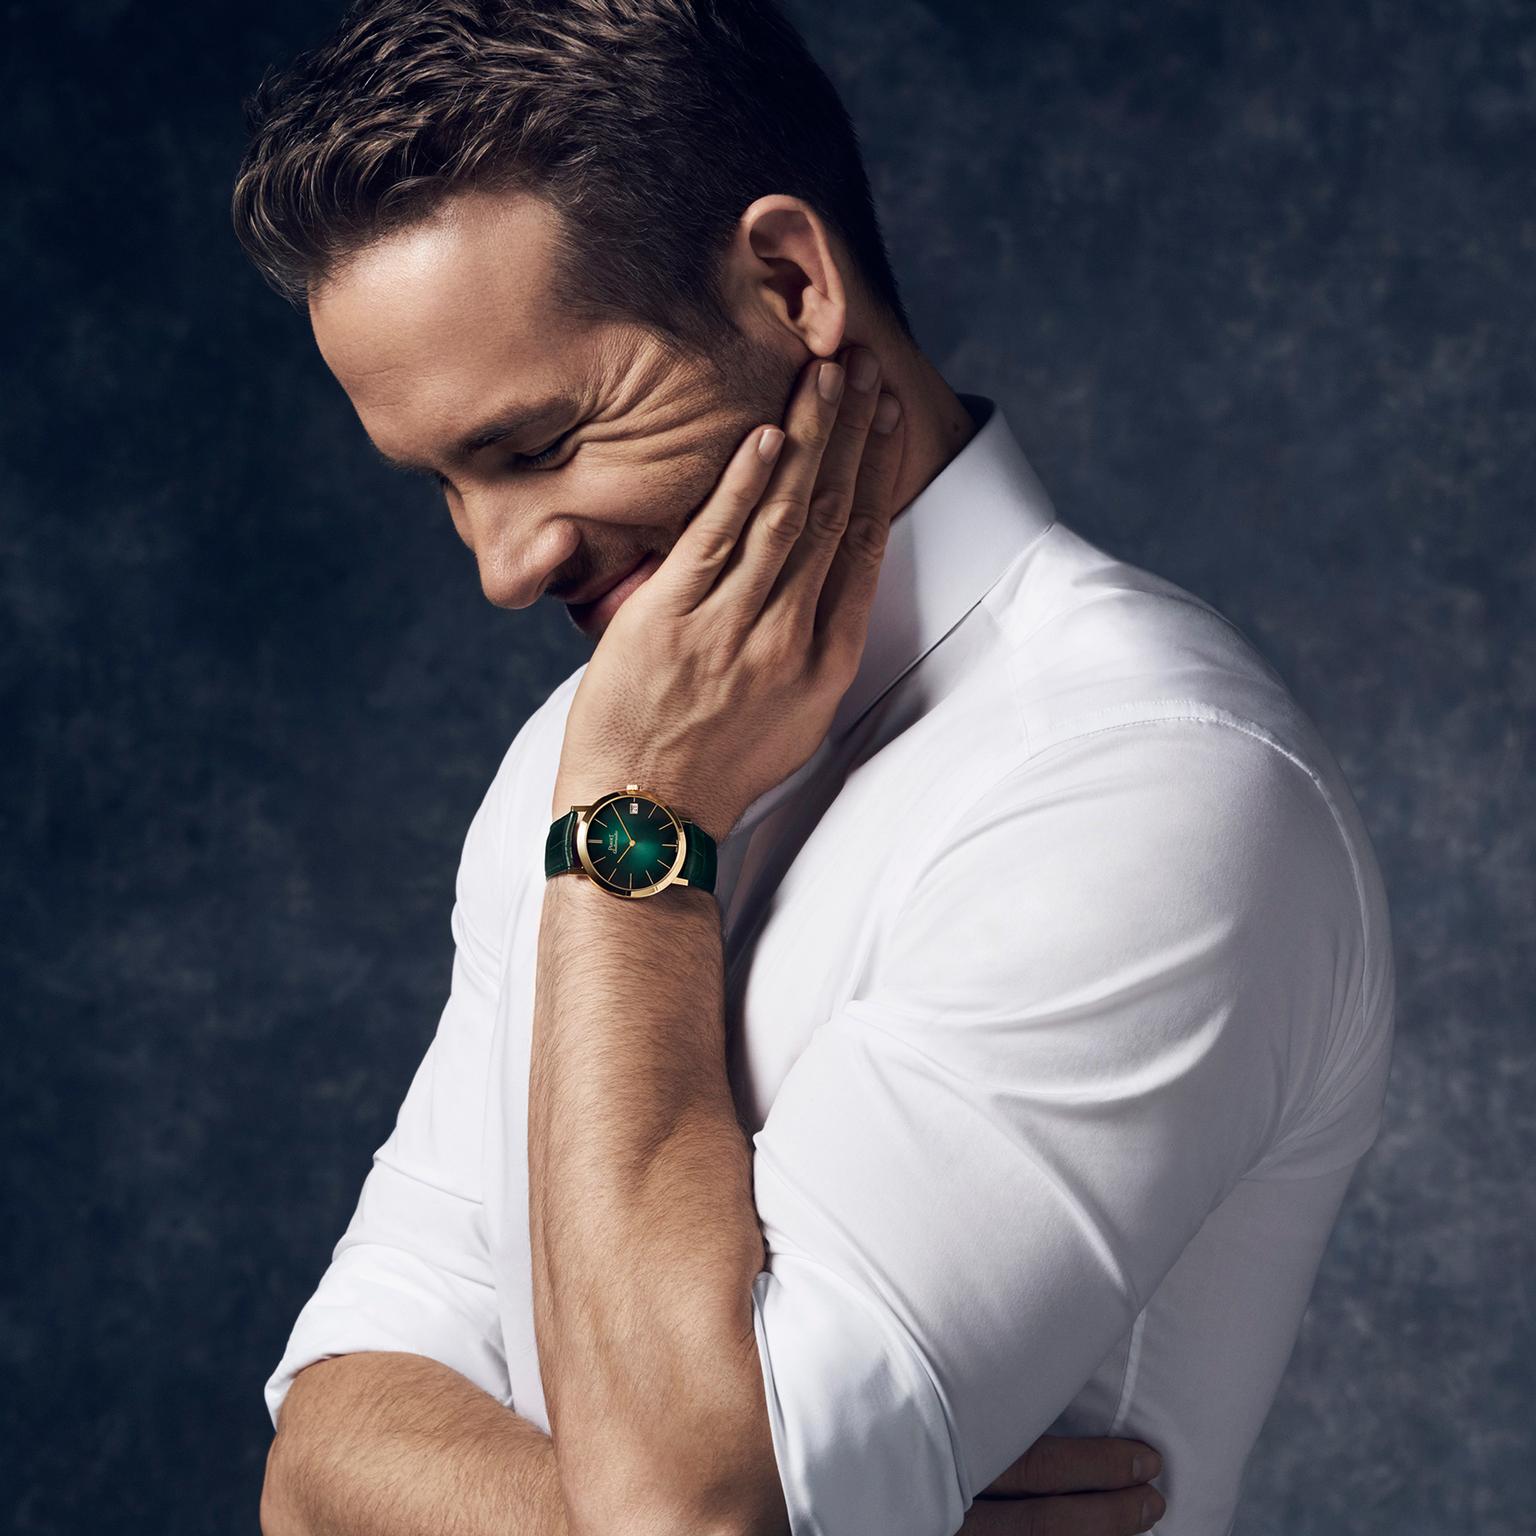 International brand ambassador Ryan Reynolds wears a Piaget Altiplano watch with a green dial